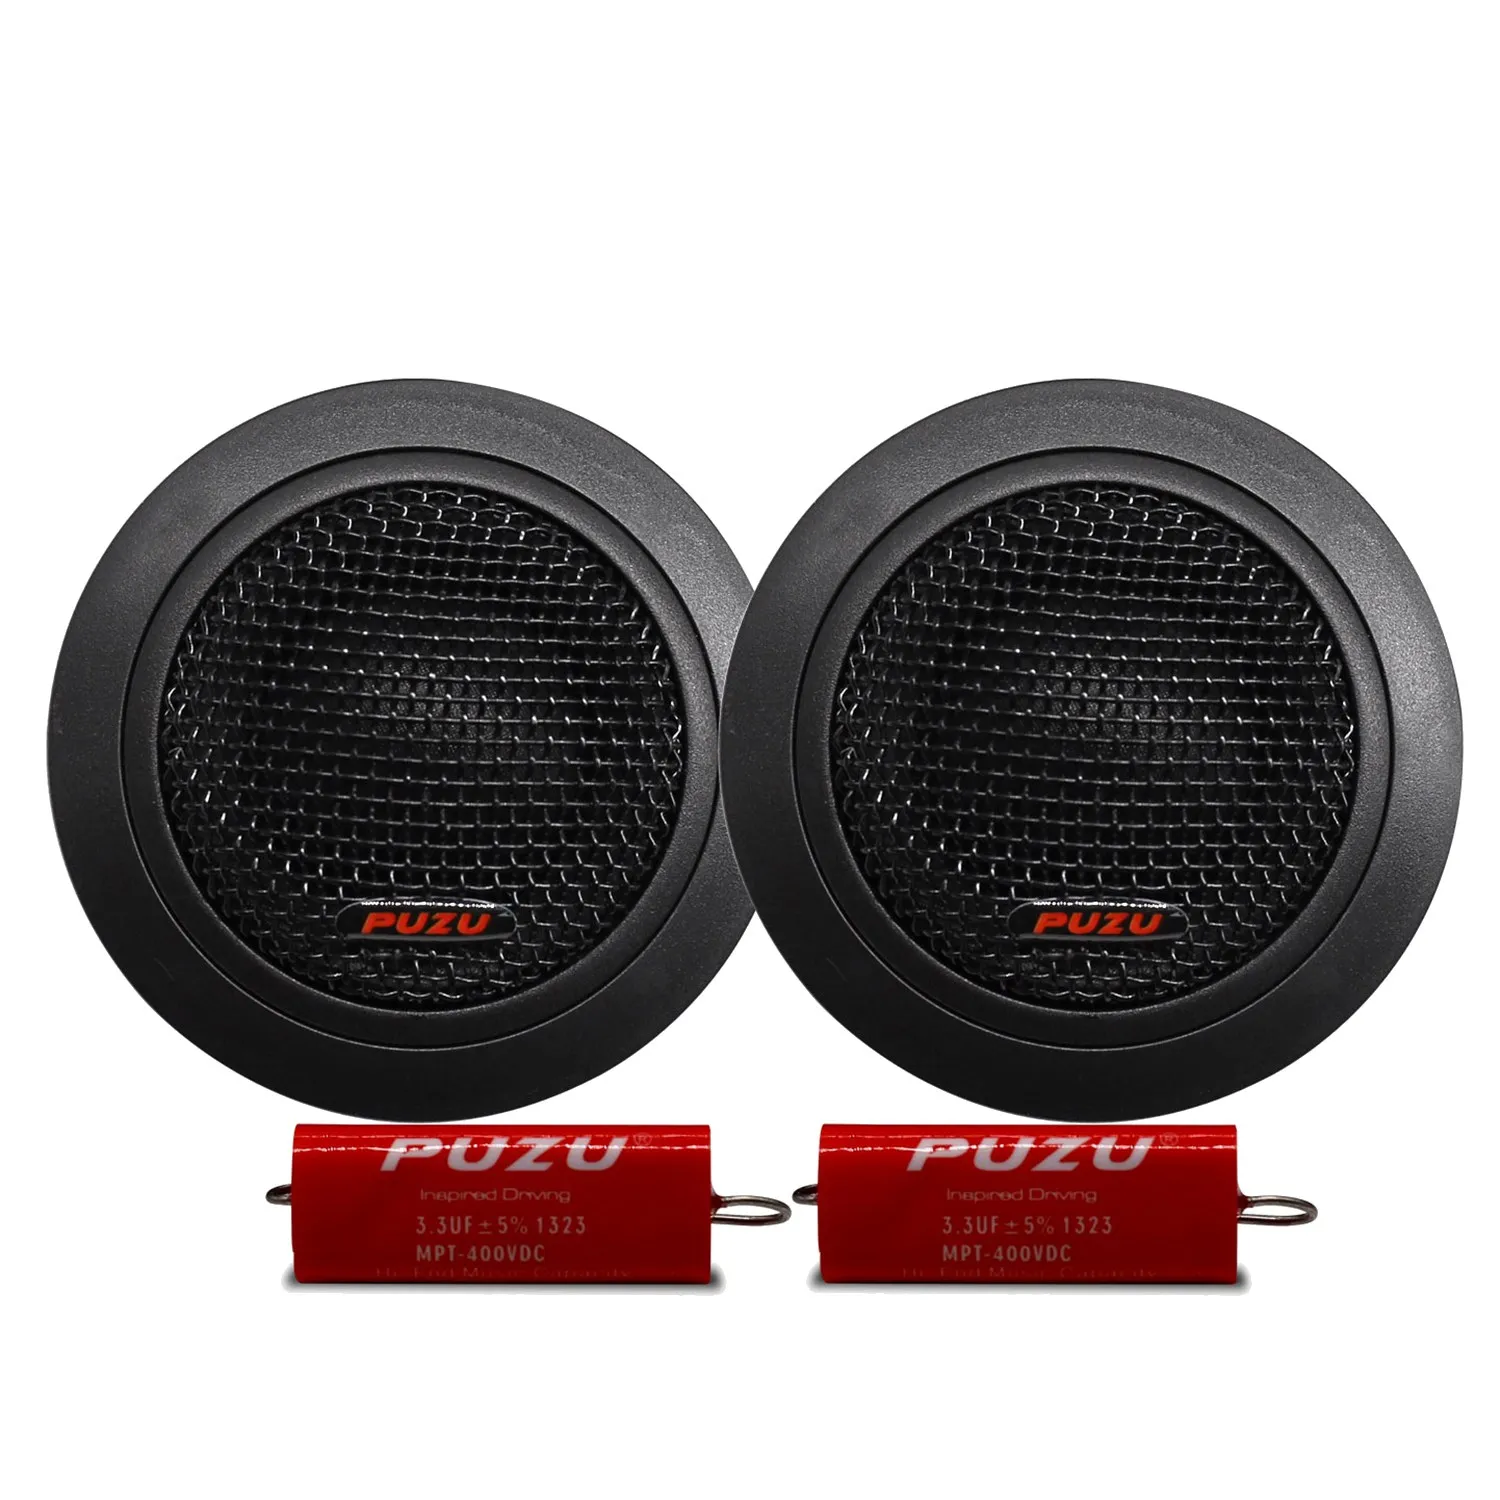 

PUZU PZ-G20 25mm ASV Silk Dome Car Audio Tweeter Speakers 80W Output Power High Sensitivity Treble Sound Upgrade System